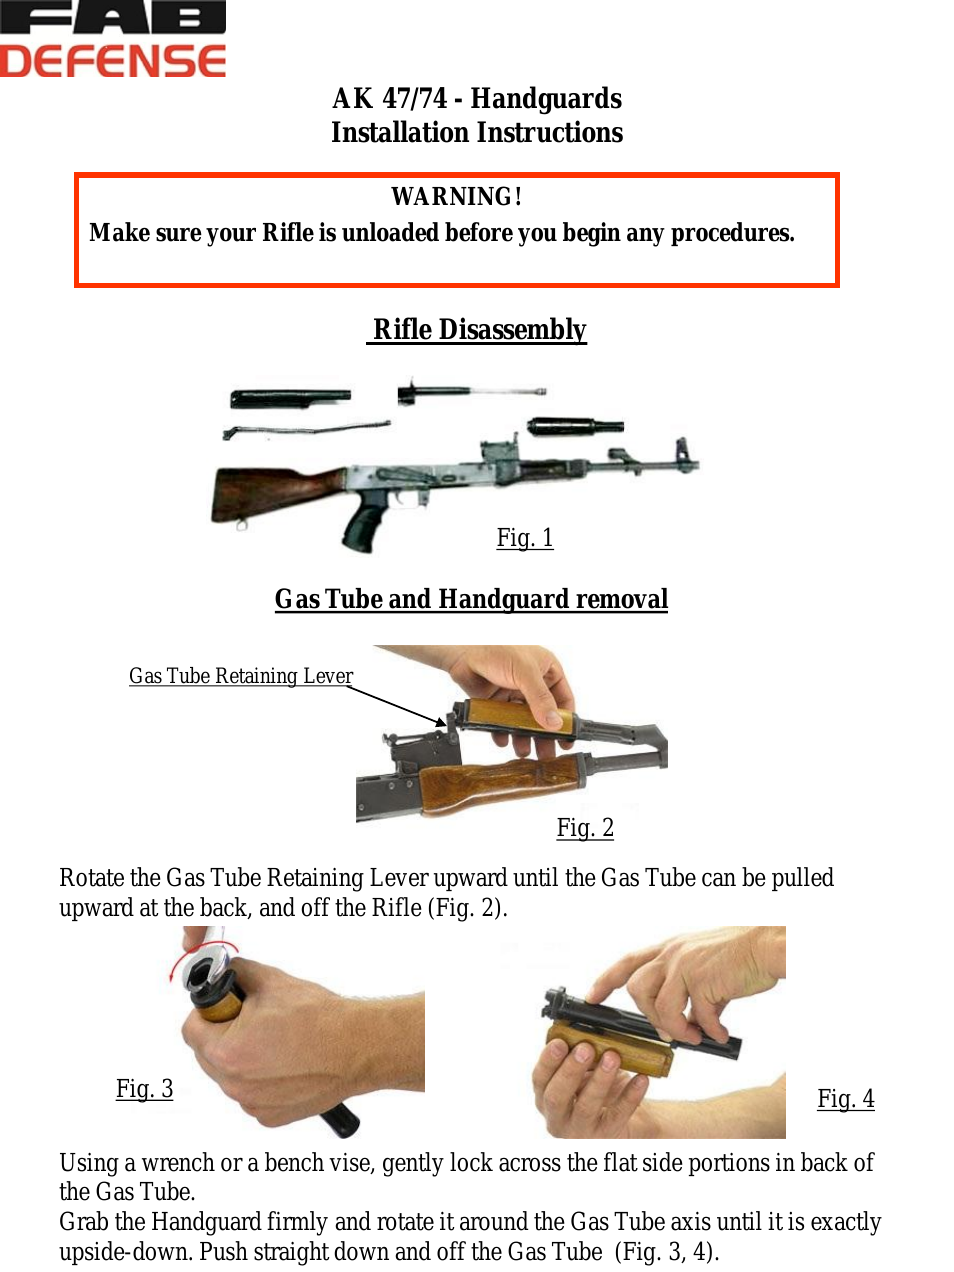 AK 47 - Handguards